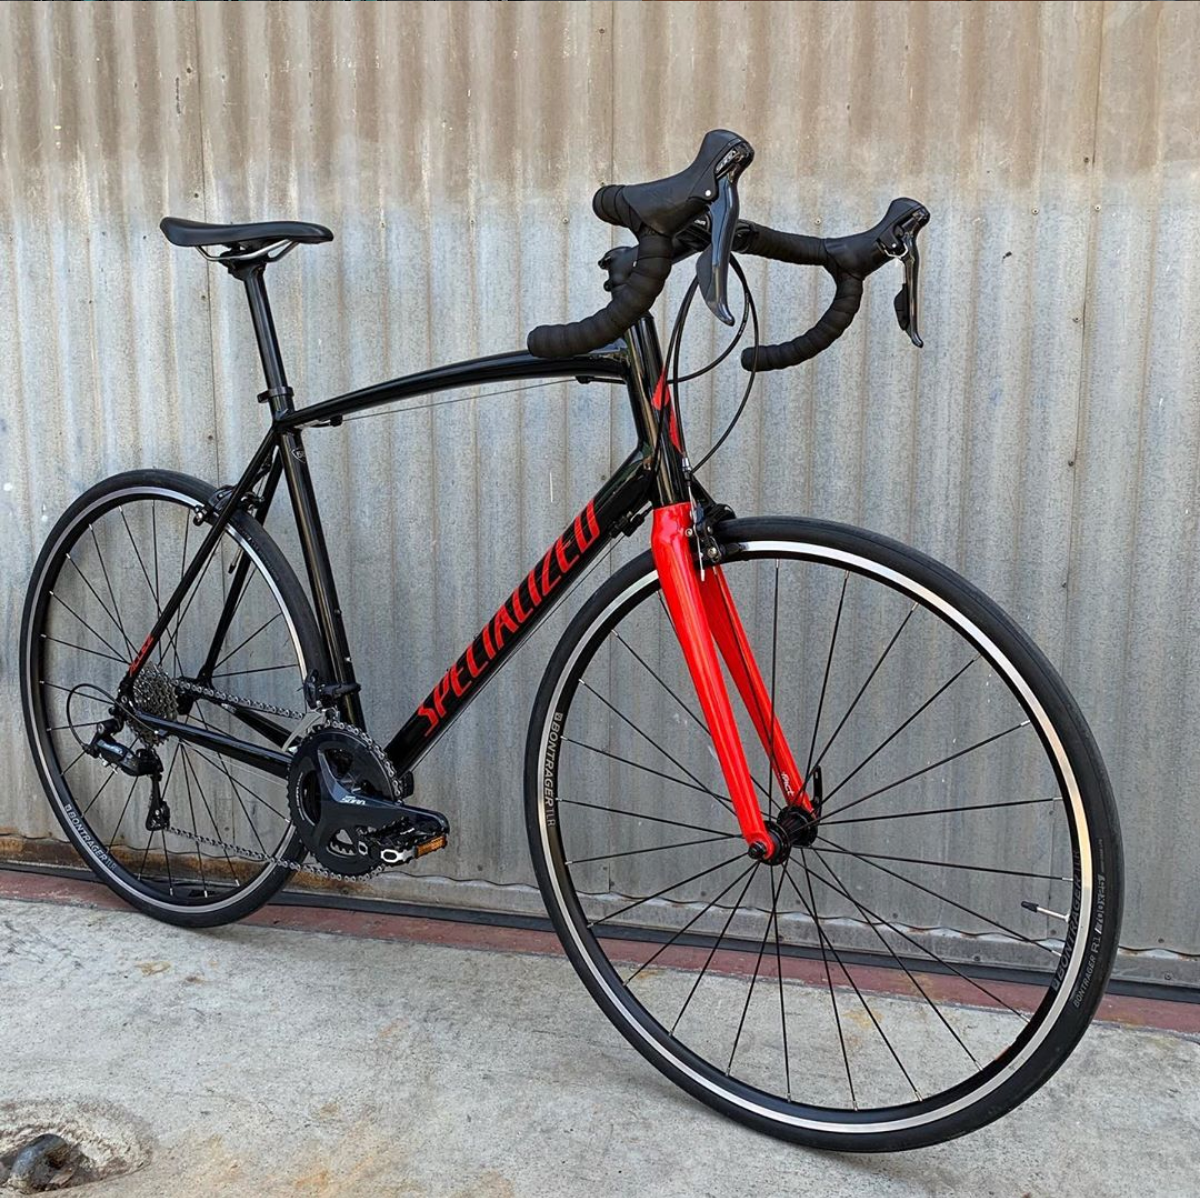 Specialzied Allez Road Bike - Used 2015ish Sora Entry Level Race Bike